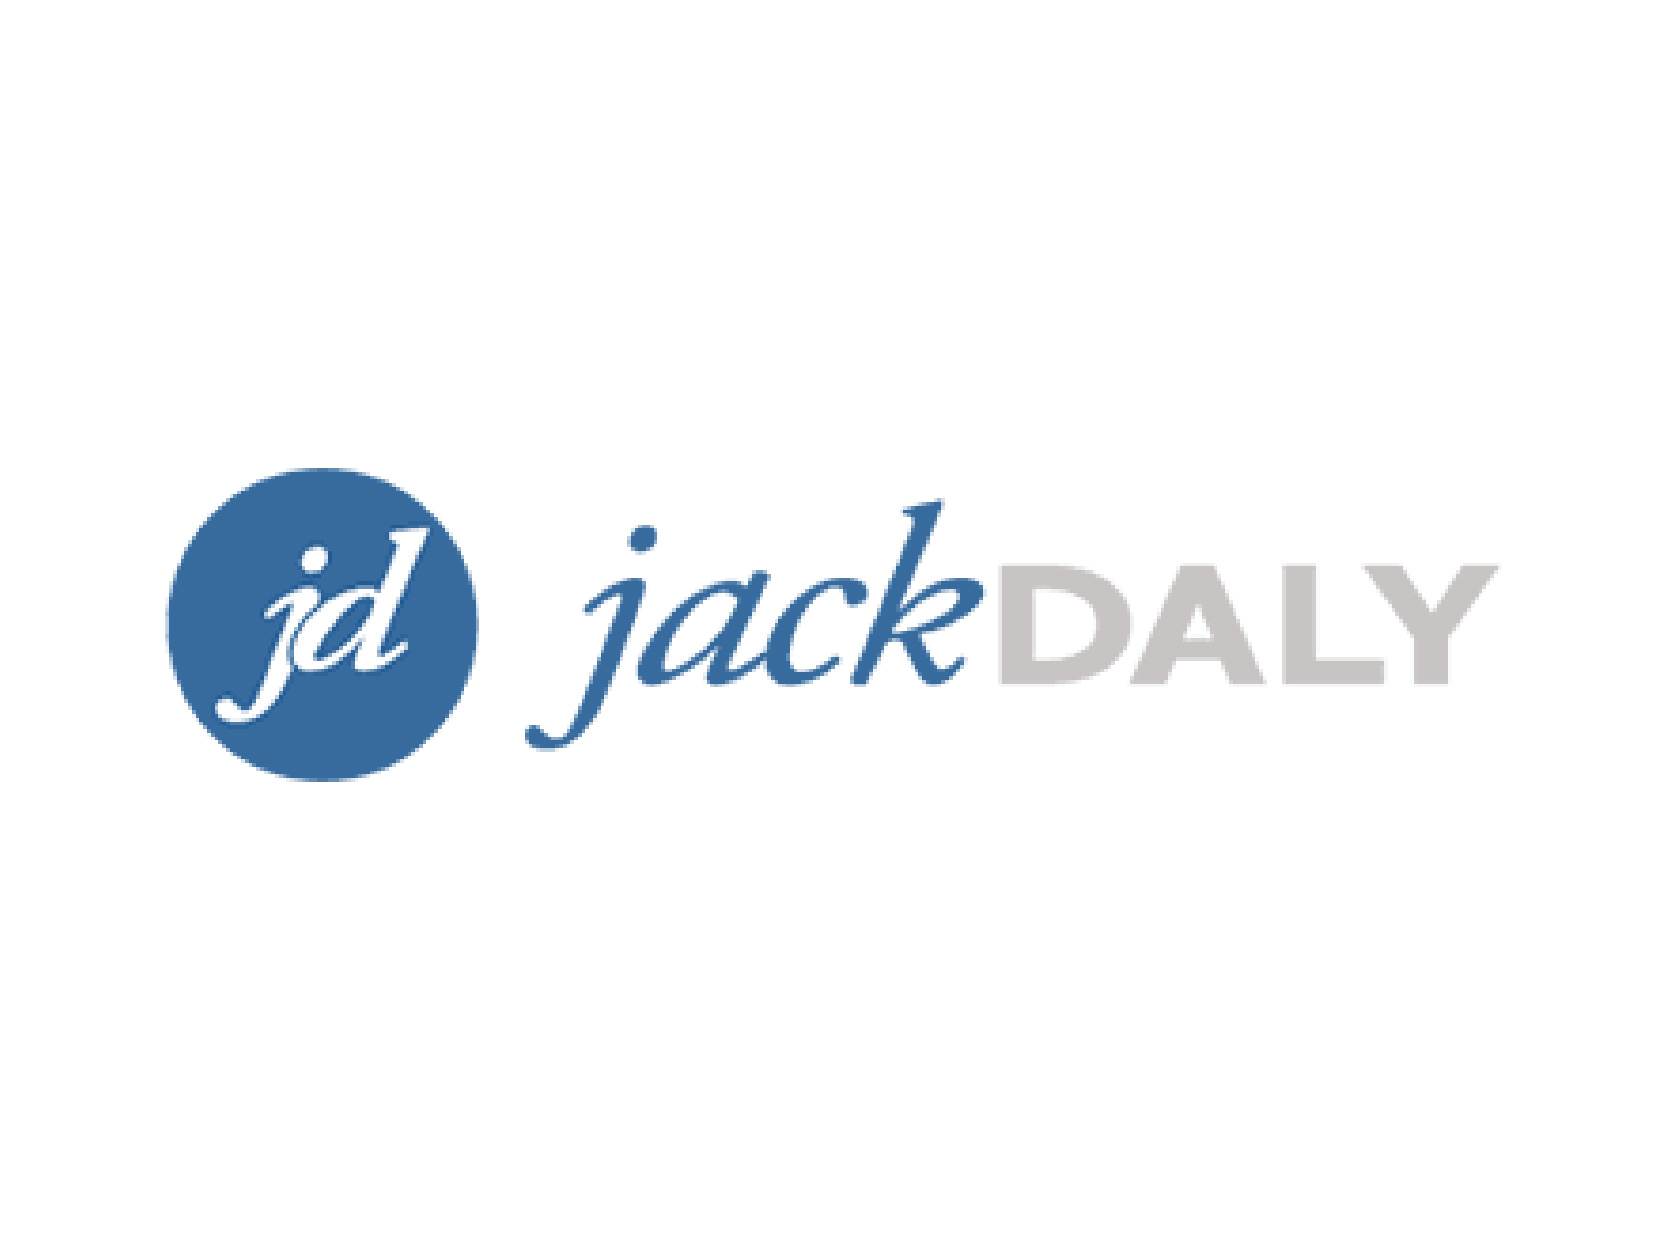 Jack Daly